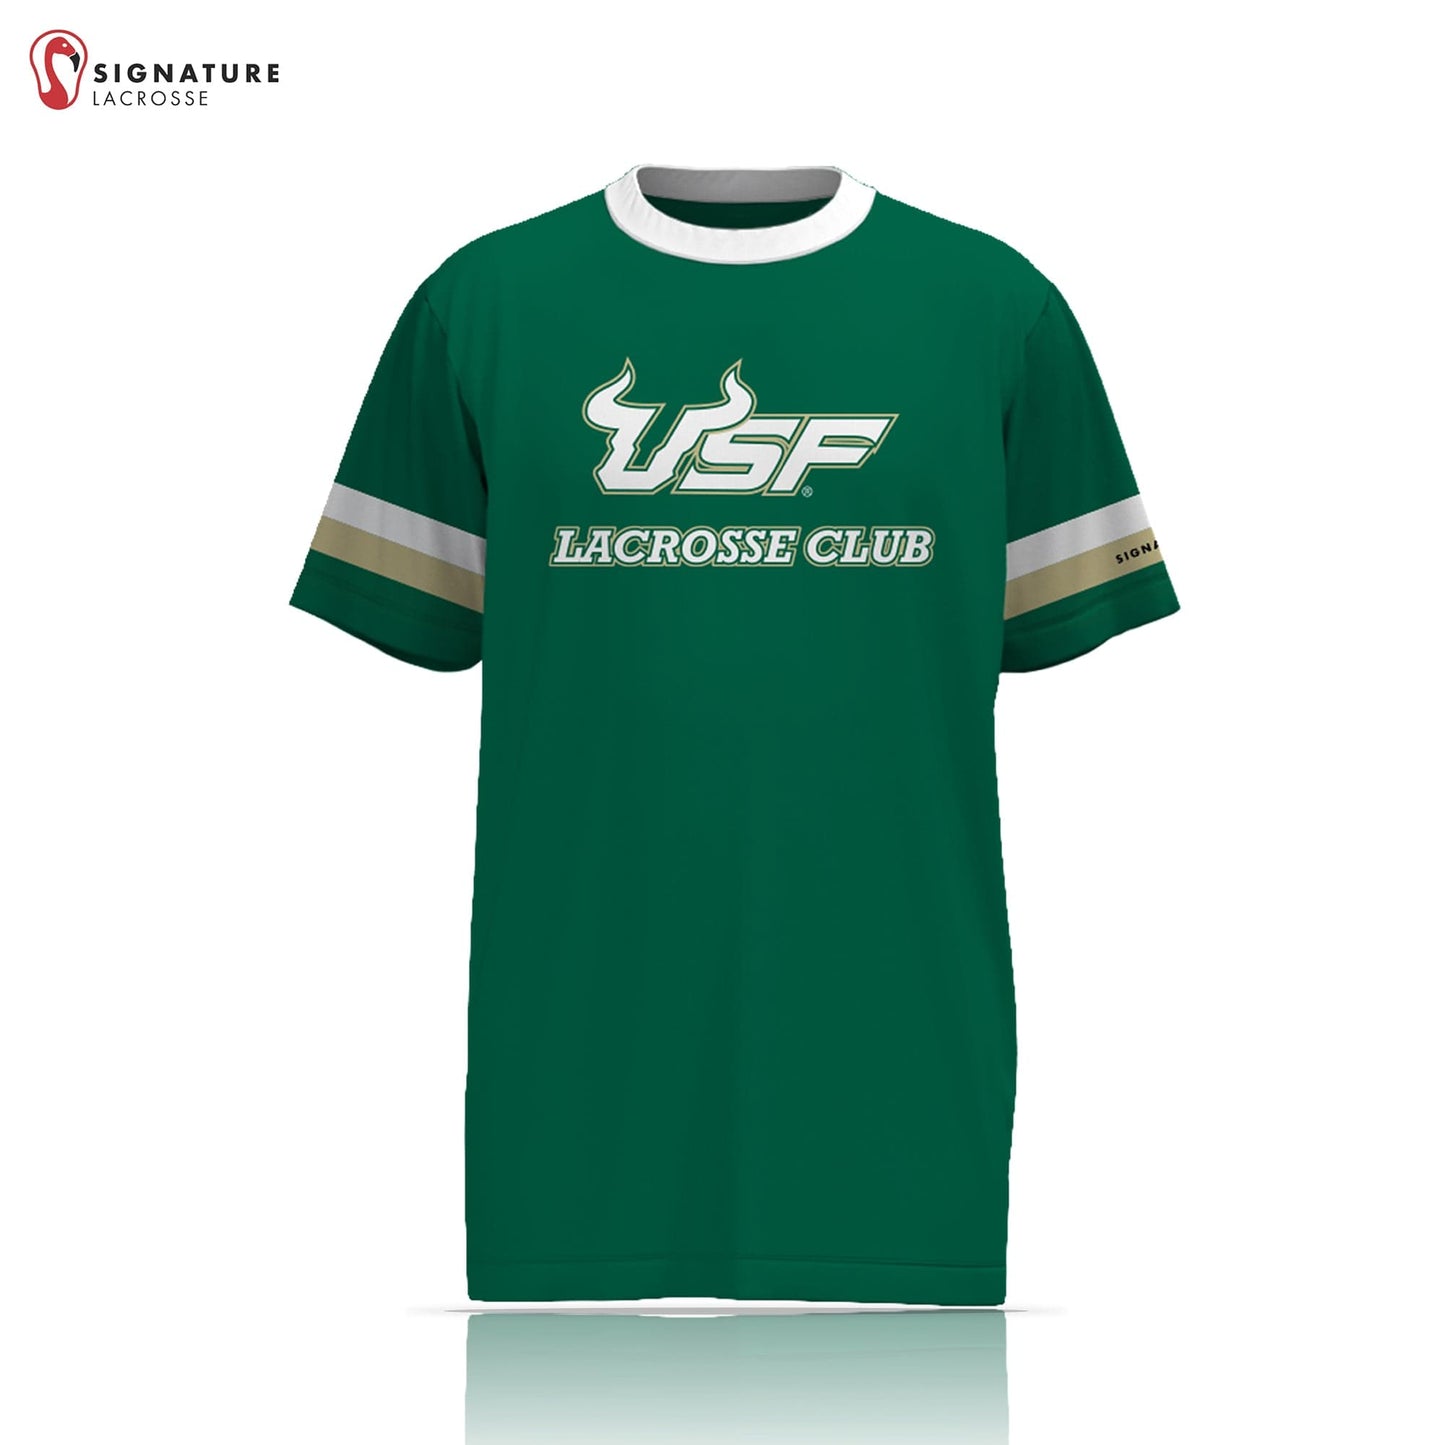 USF Lacrosse Men's Green Short Sleeve Shooting Shirt: N/A Signature Lacrosse